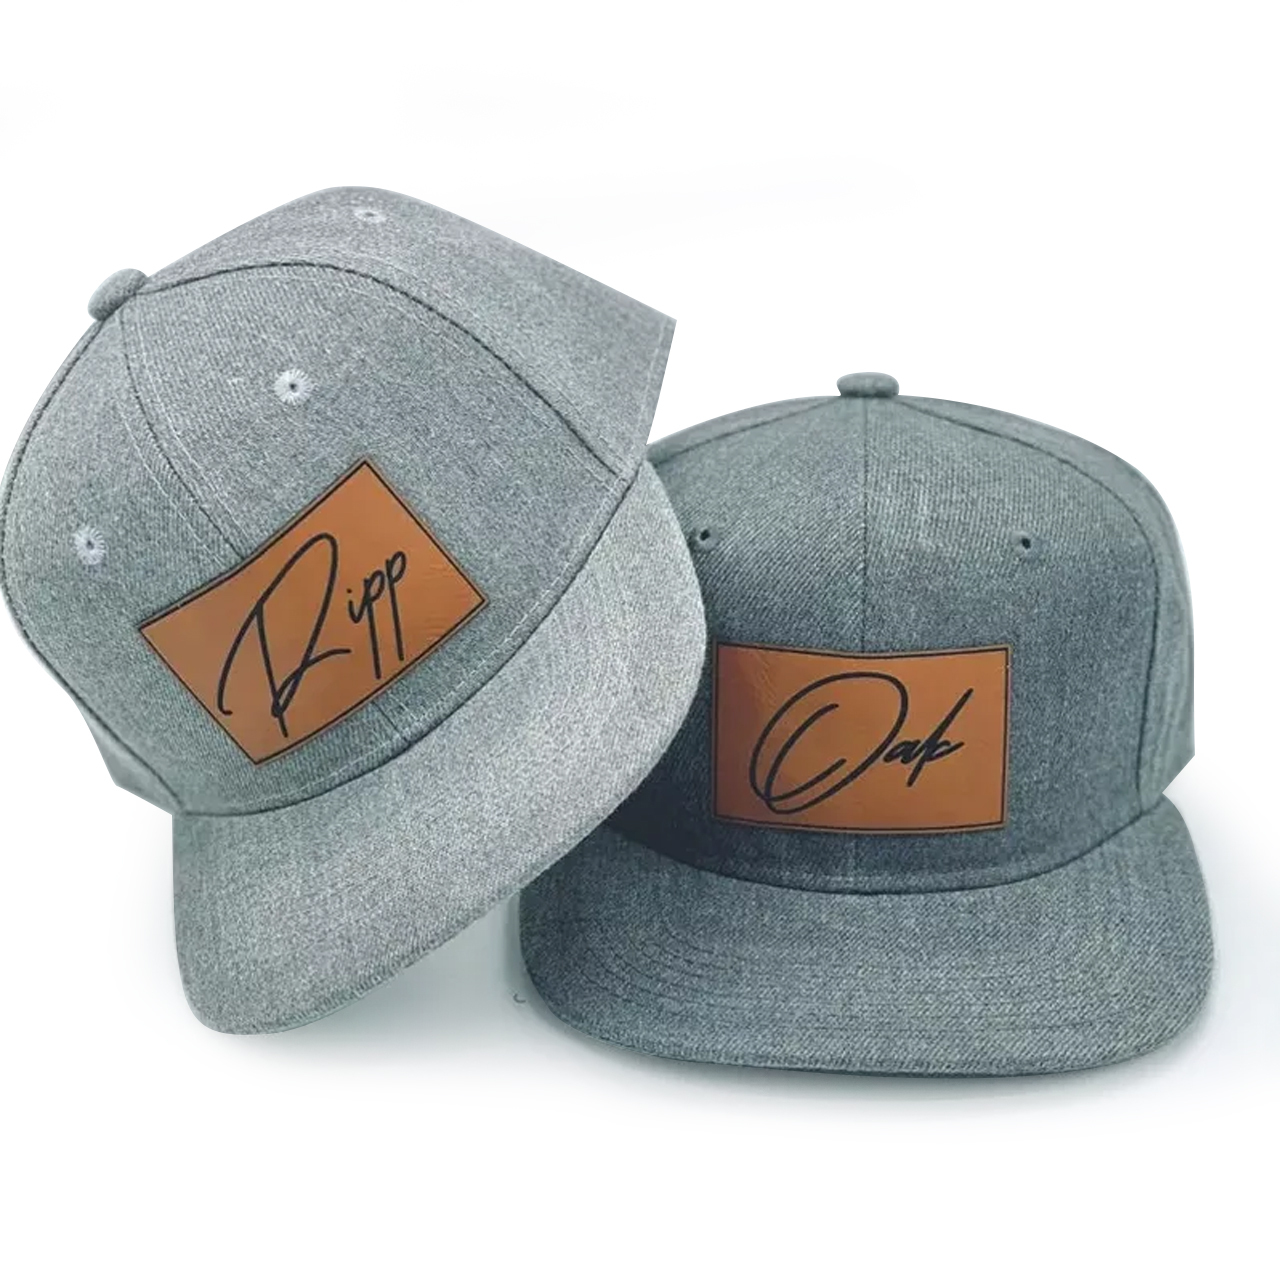  UPF 30+ Snapback Hat Vegan Leather Patch(hat cap)